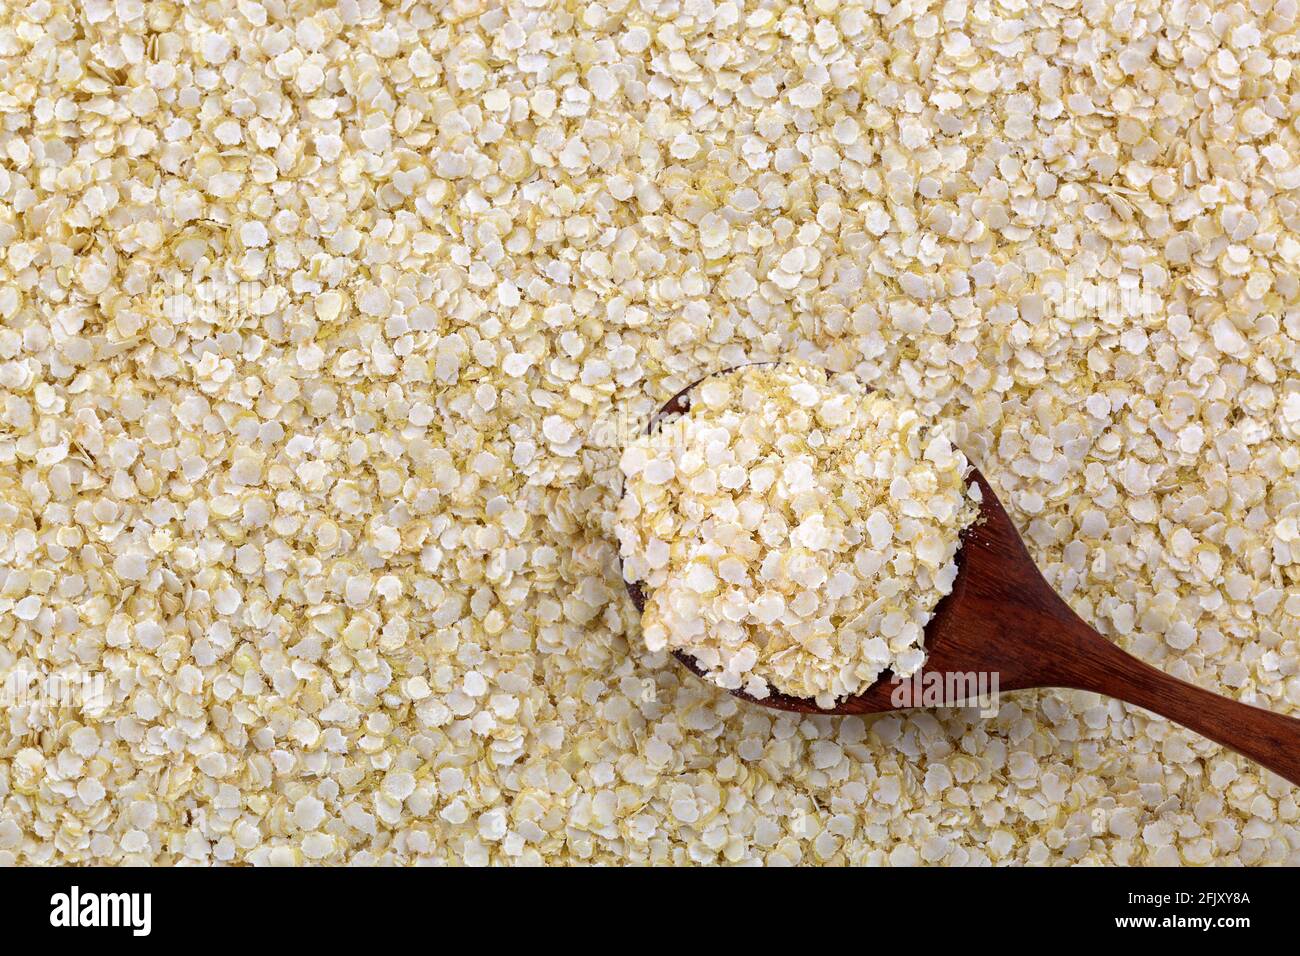 Cuchara de rodada de semilla de quinua sin gluten. Granos orgánicos aplanados altos en proteínas, fibra dietética, vitaminas B, minerales dietéticos (Chenopodi Foto de stock